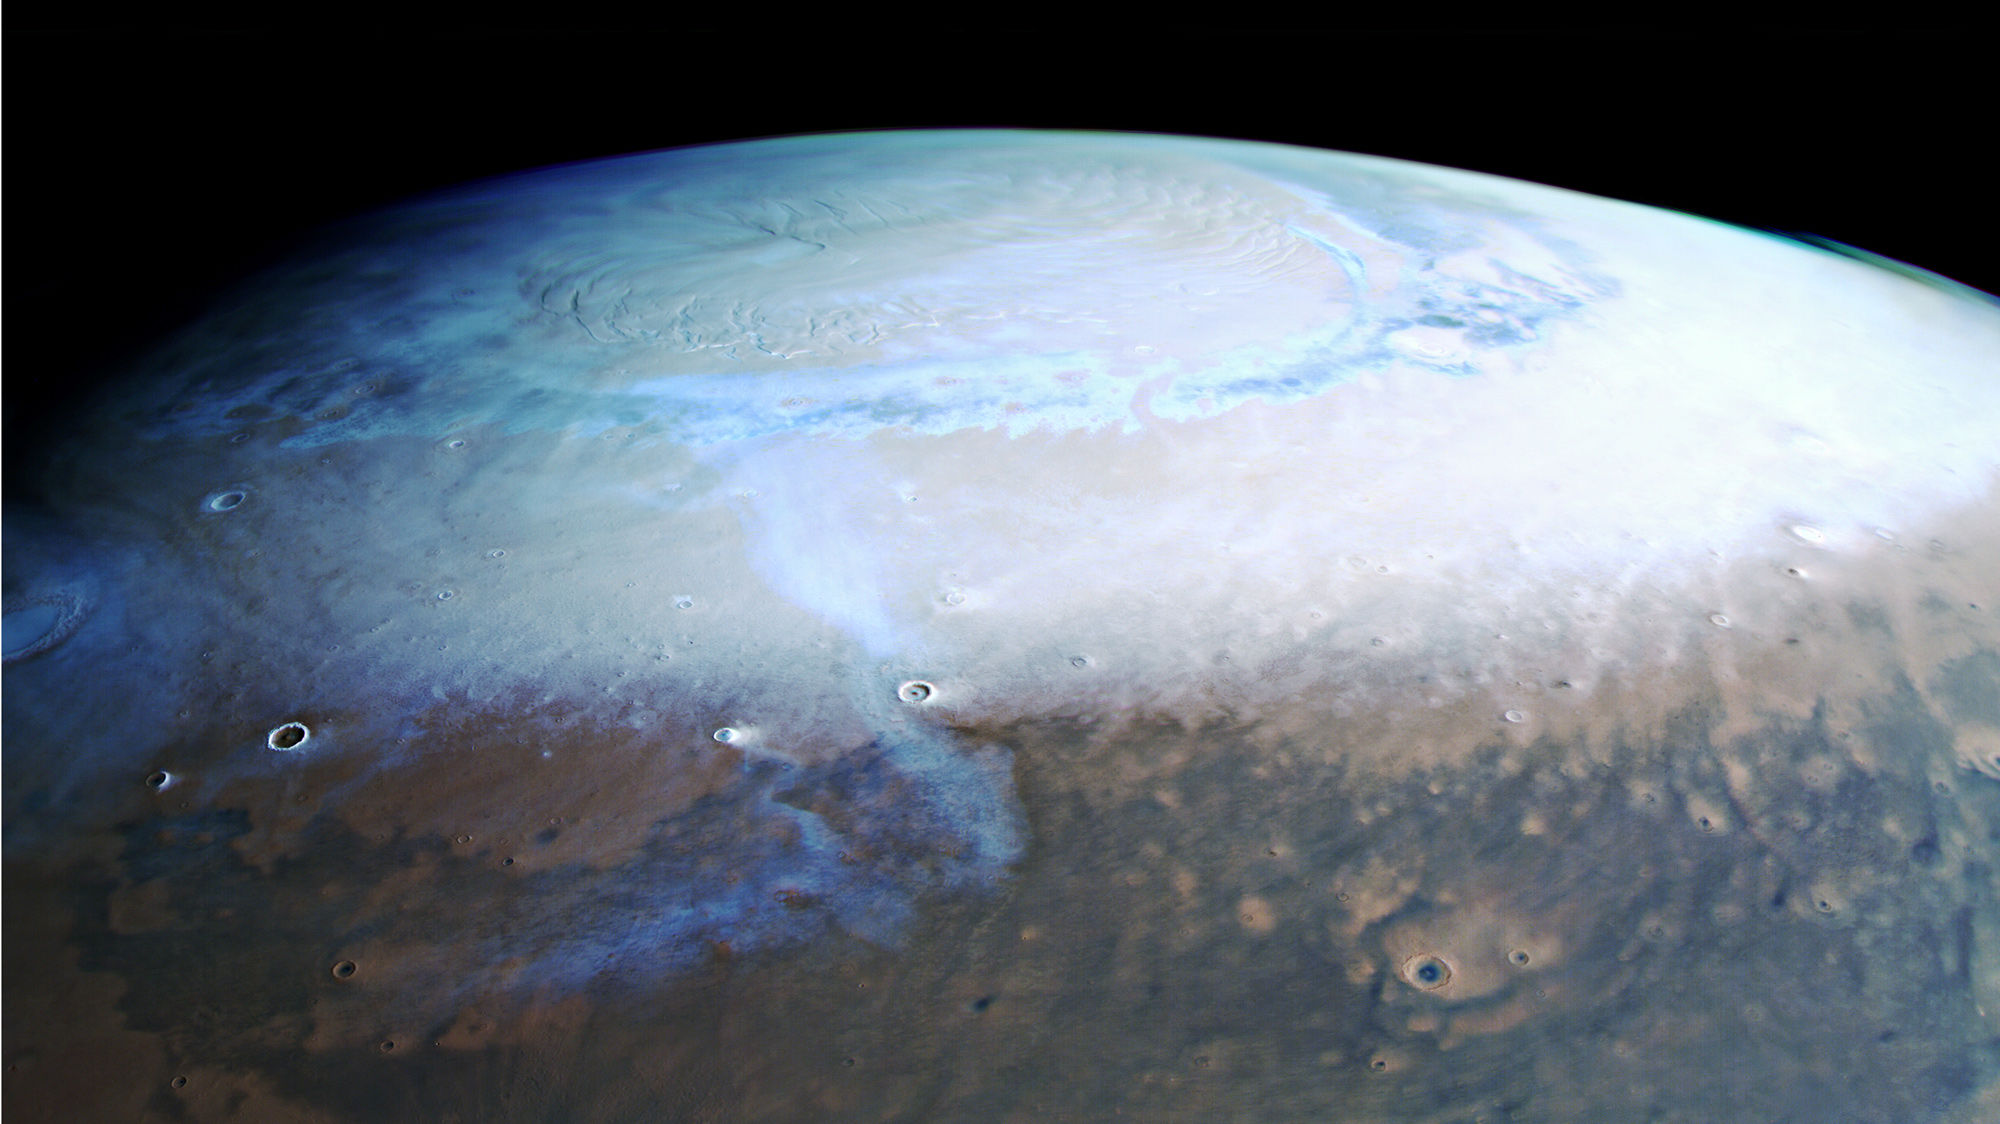 The north pole of Mars, seen by the Mars Express orbiter. Credit: ESA/DLR/FU Berlin, CC BY-SA 3.0 IGO